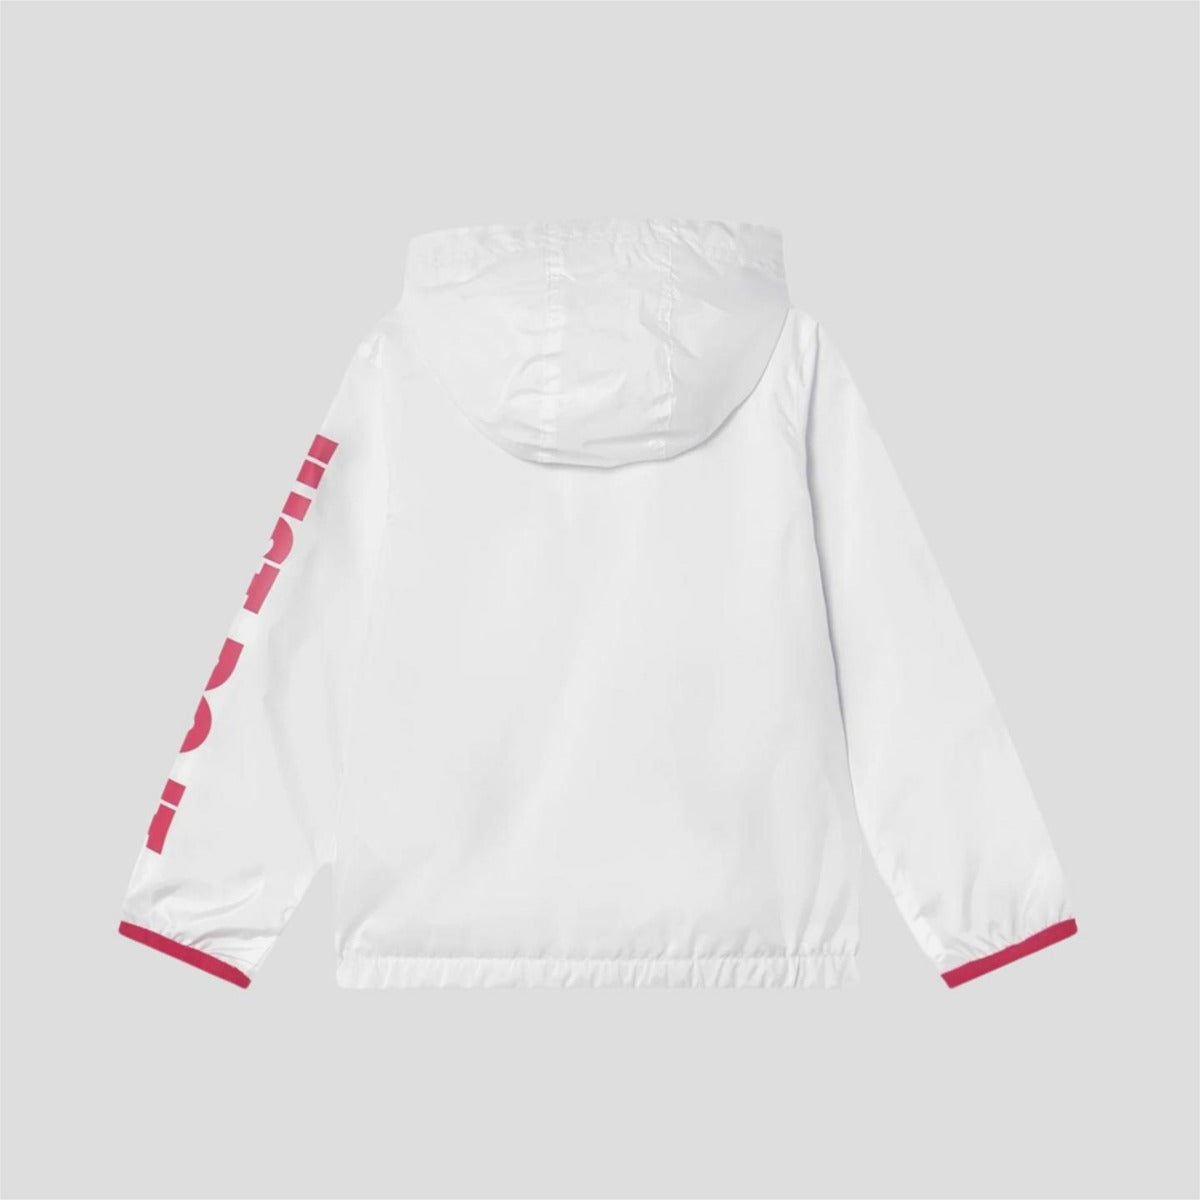 Chaqueta con capucha Nike para niños - Blanco/Negro/Rosa